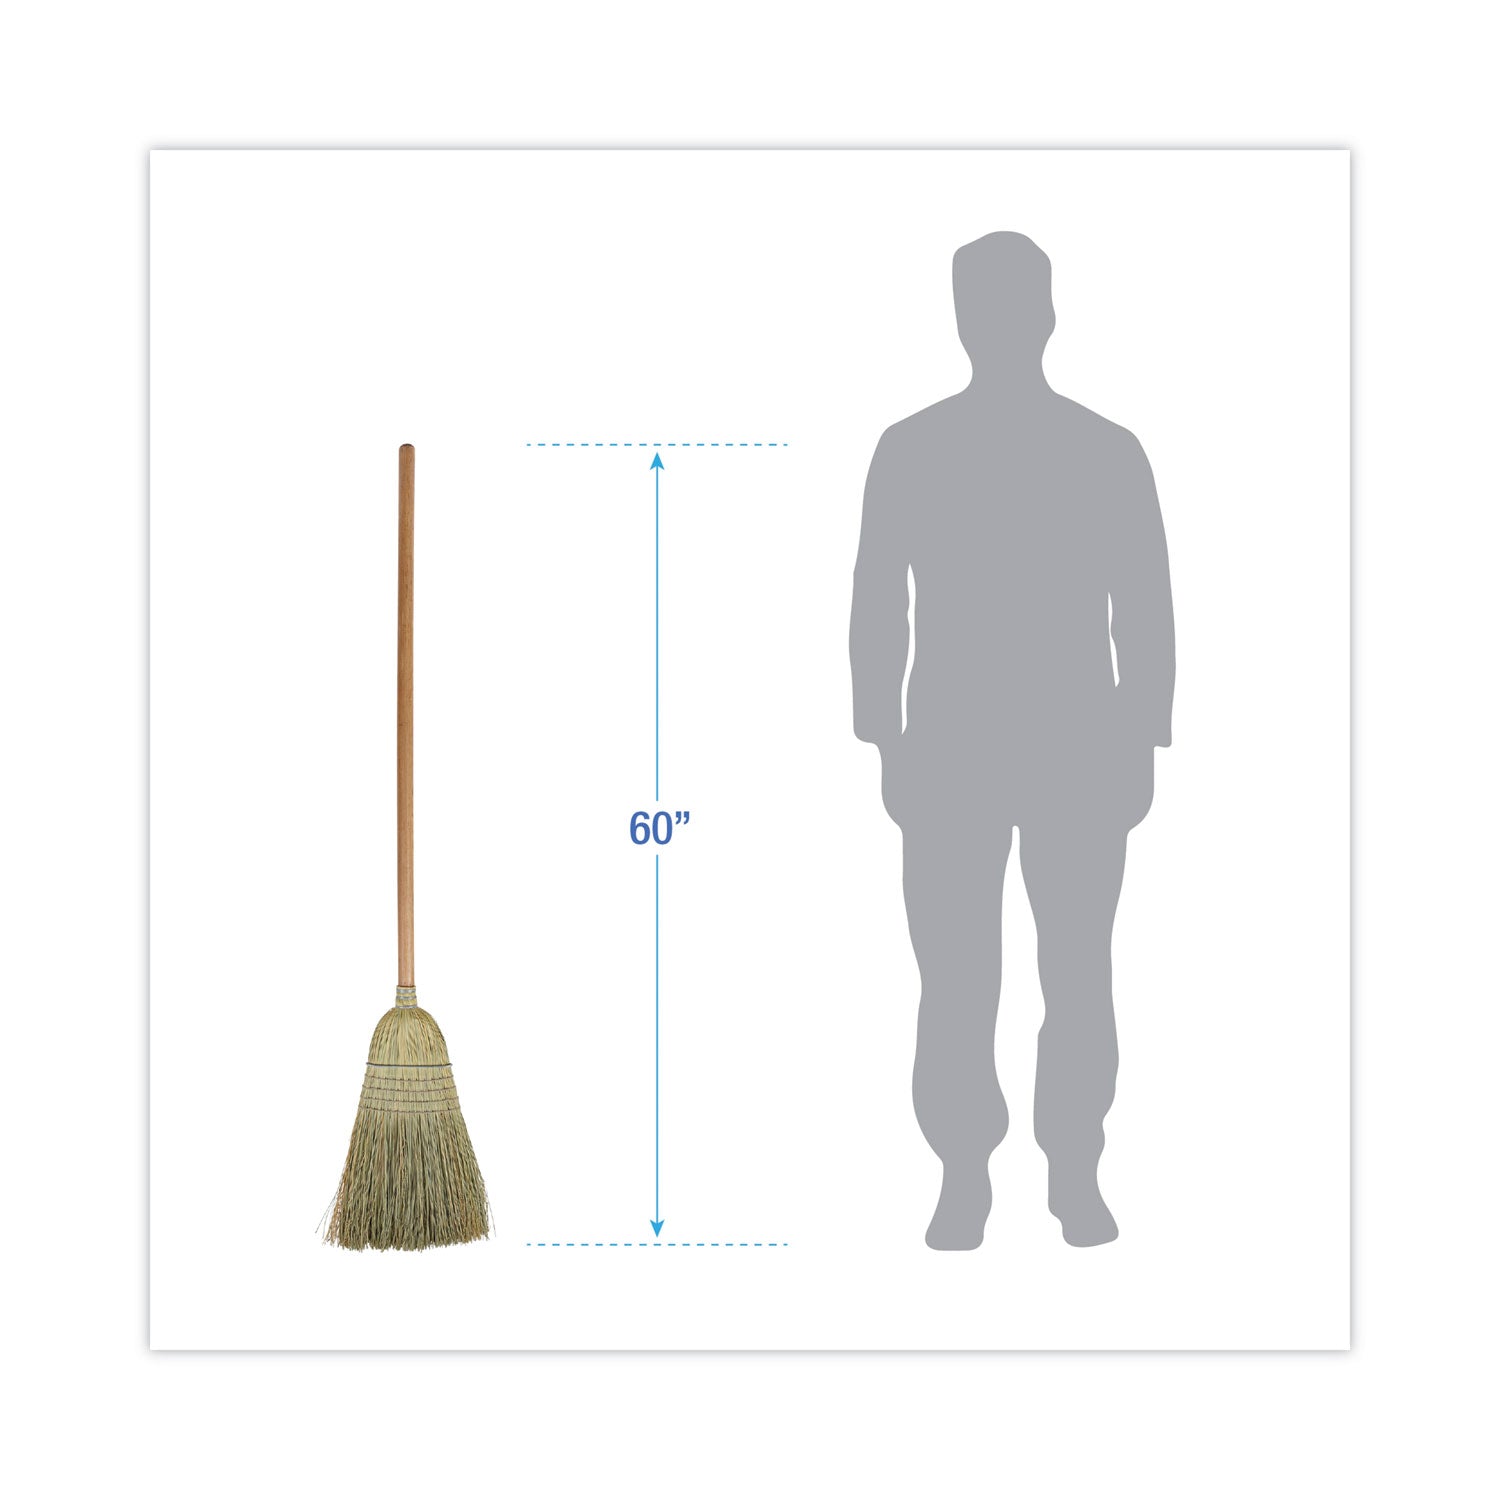 100%-corn-brooms-60-overall-length-natural-6-carton_bwkbr10001 - 2